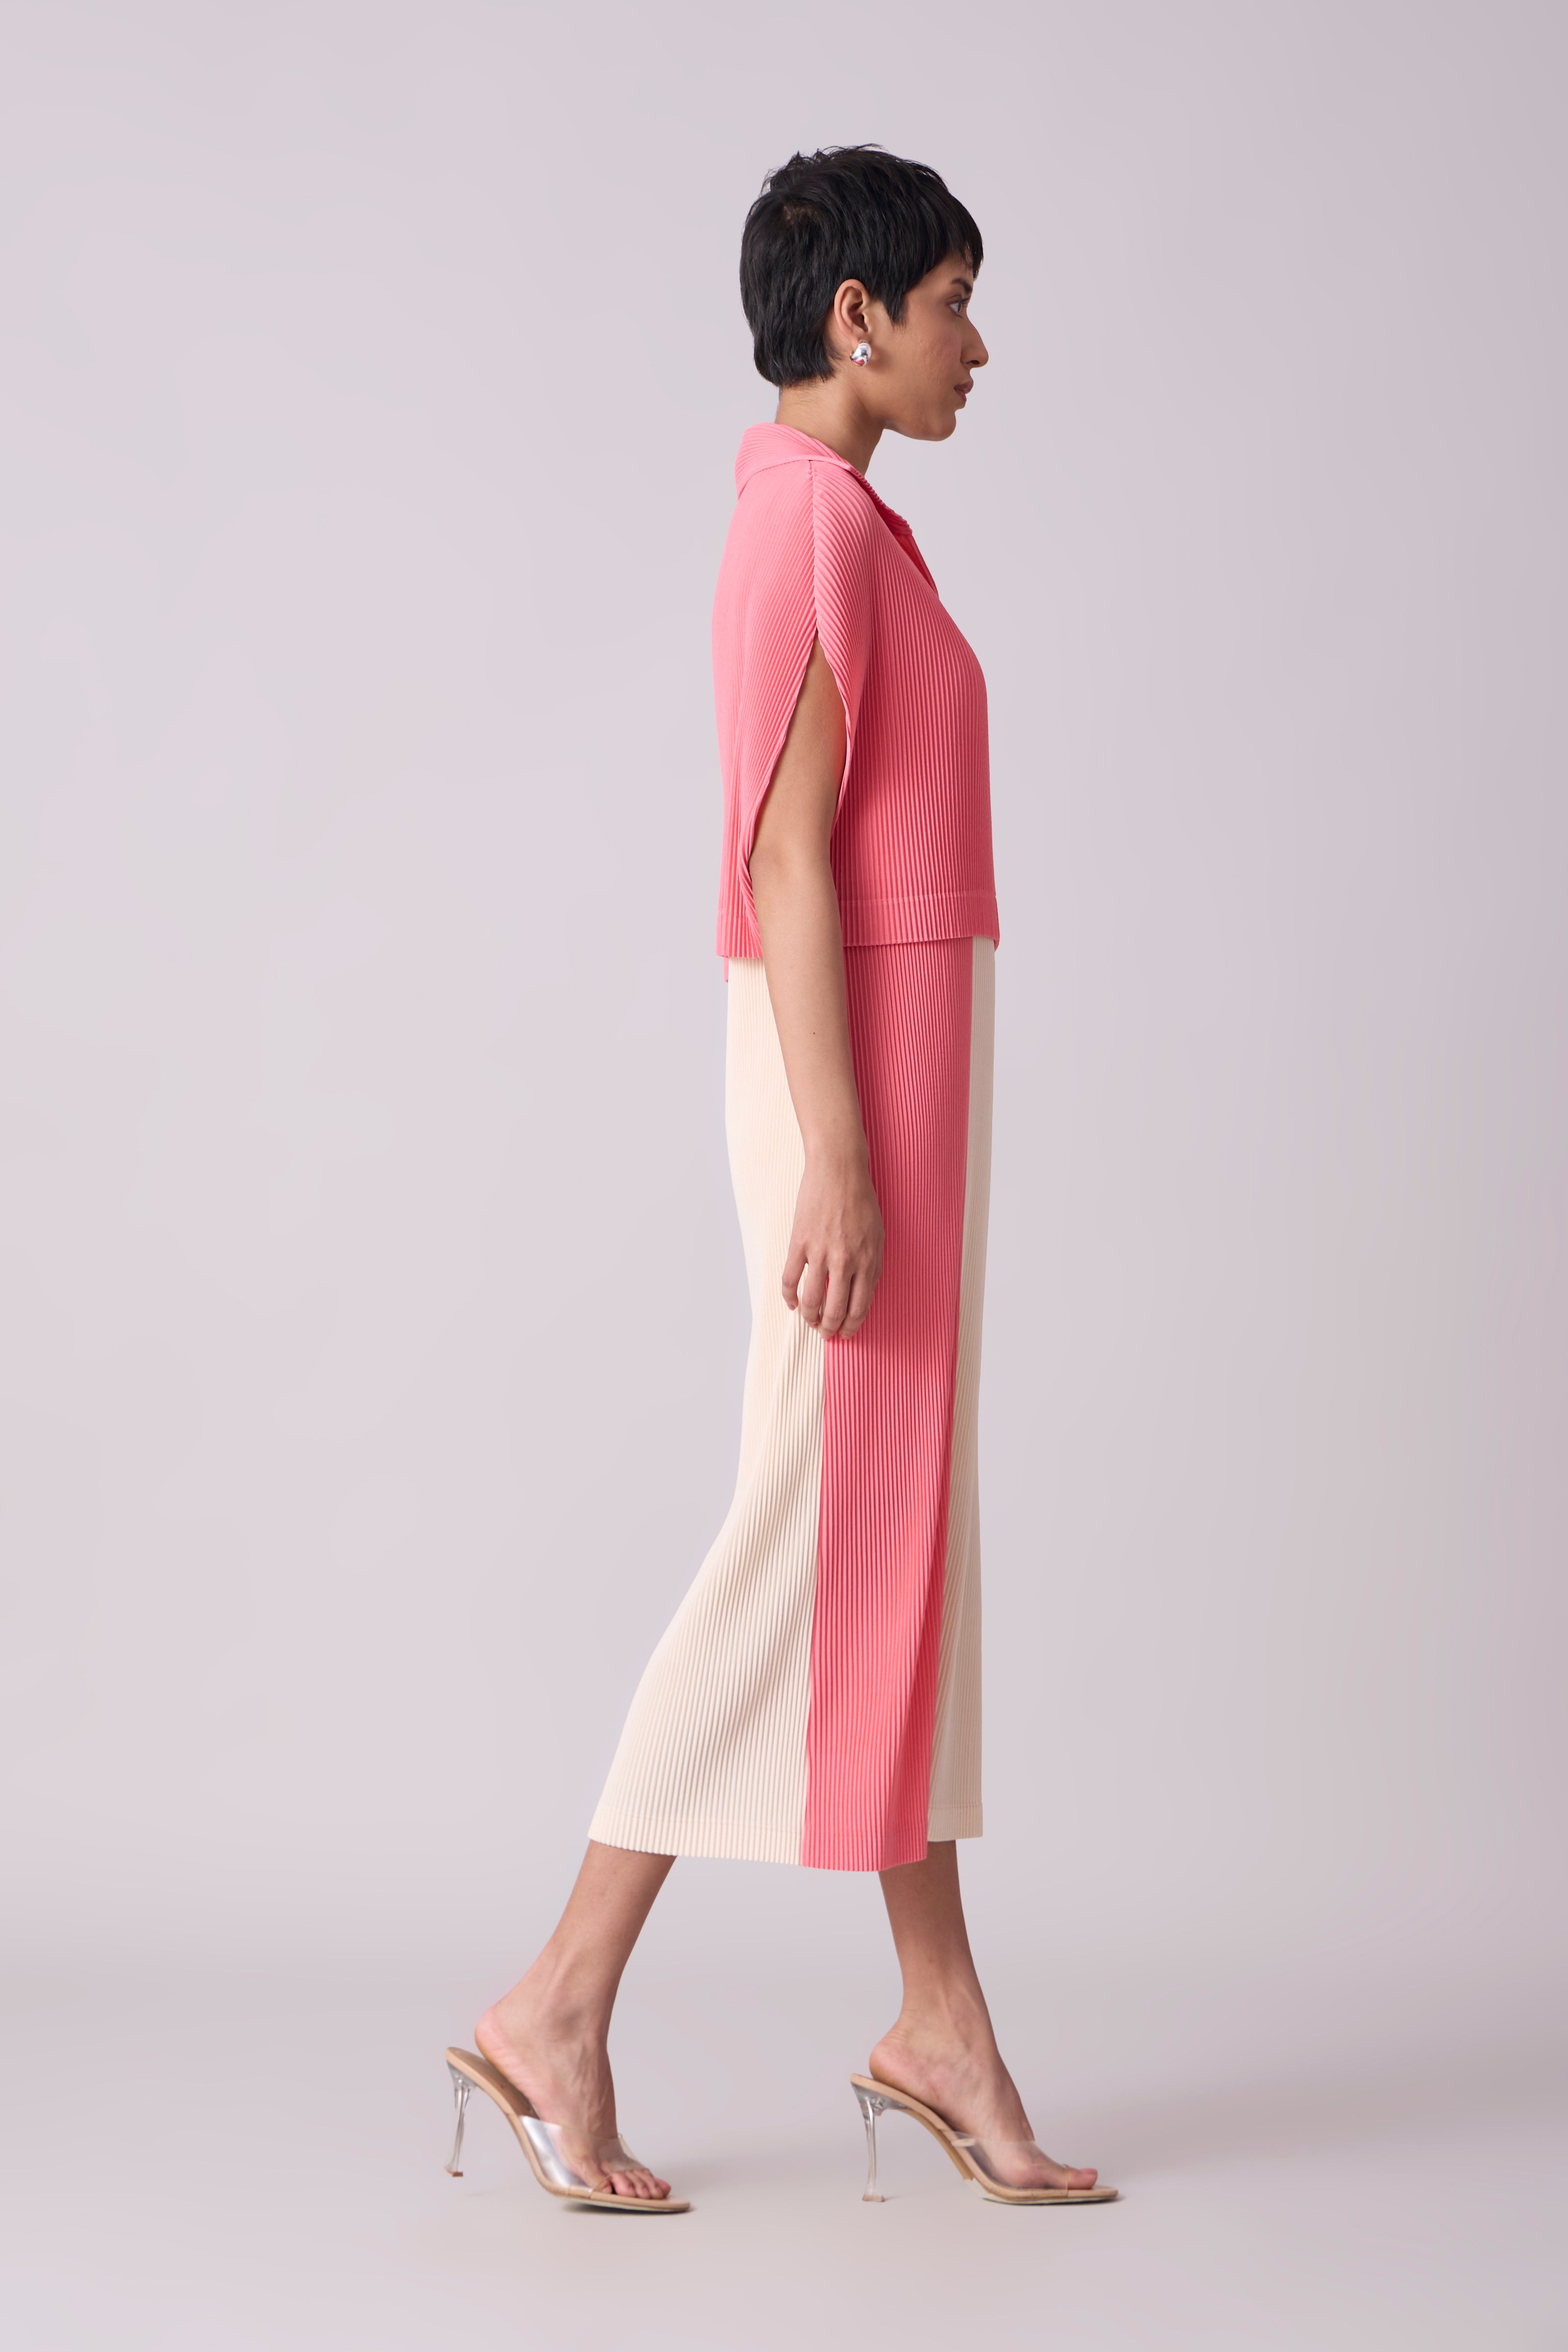 Josie Dual Colour Dress - Pink & Ivory